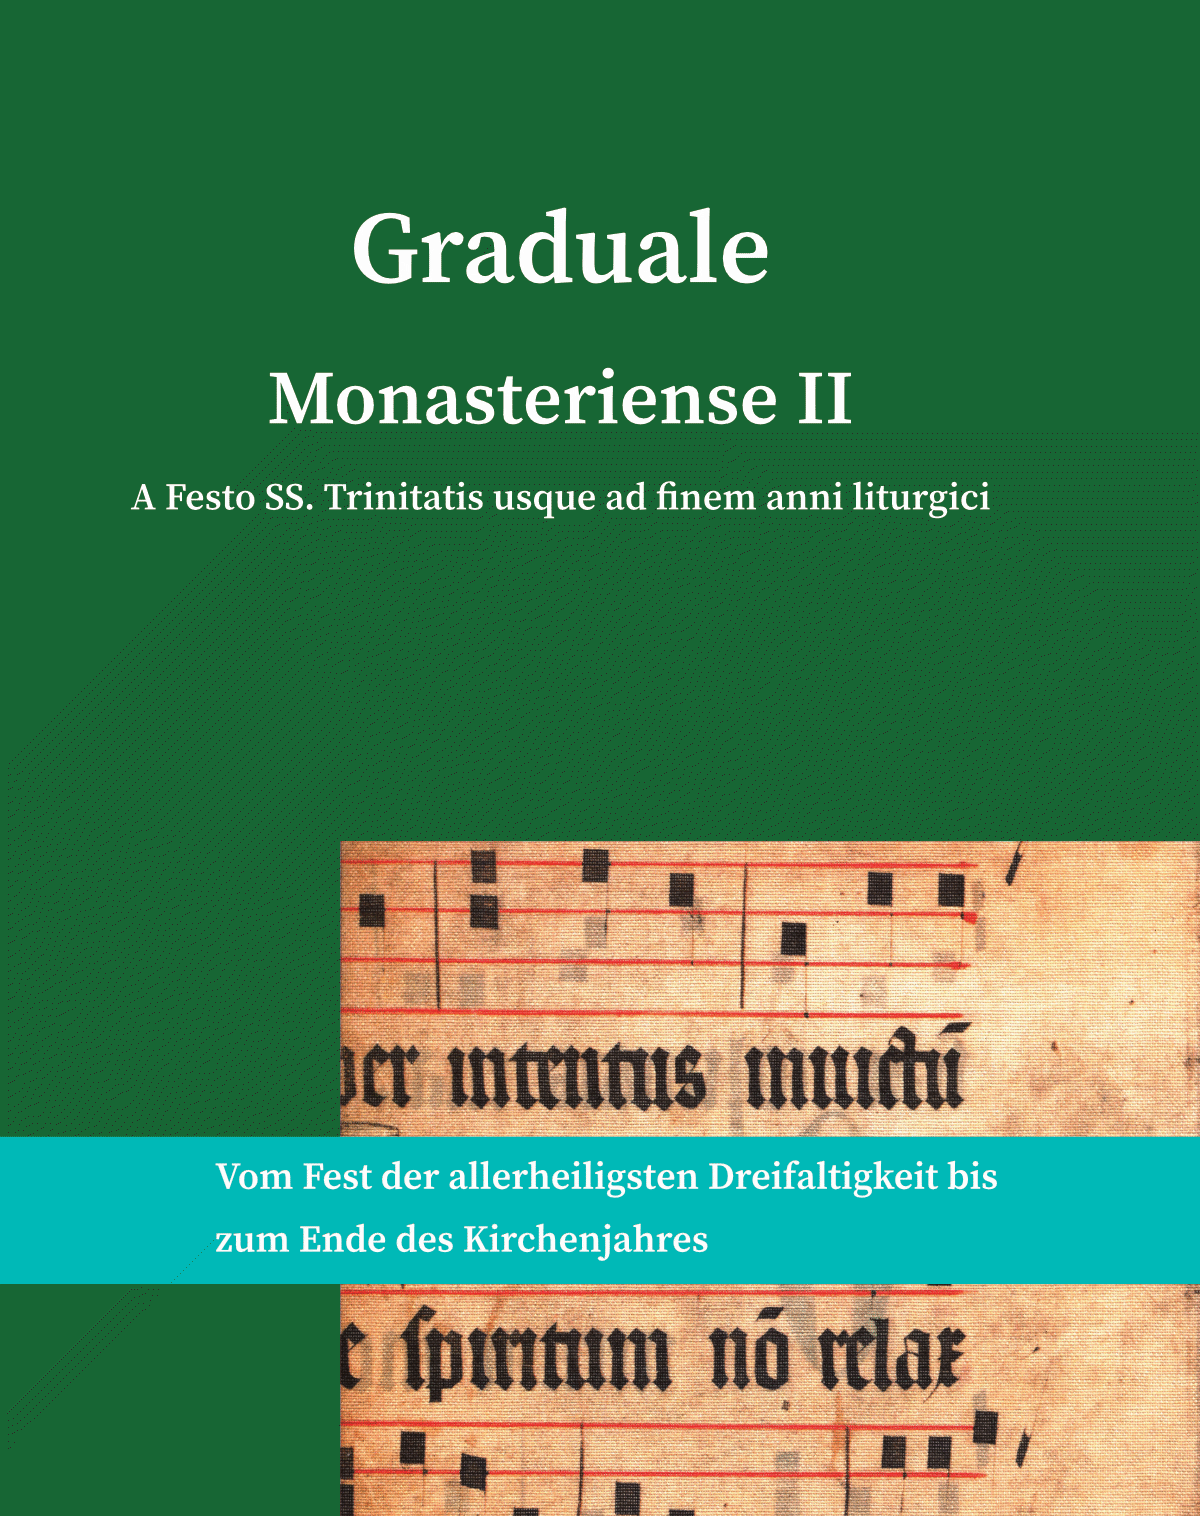 Graduale Monasteriense II.